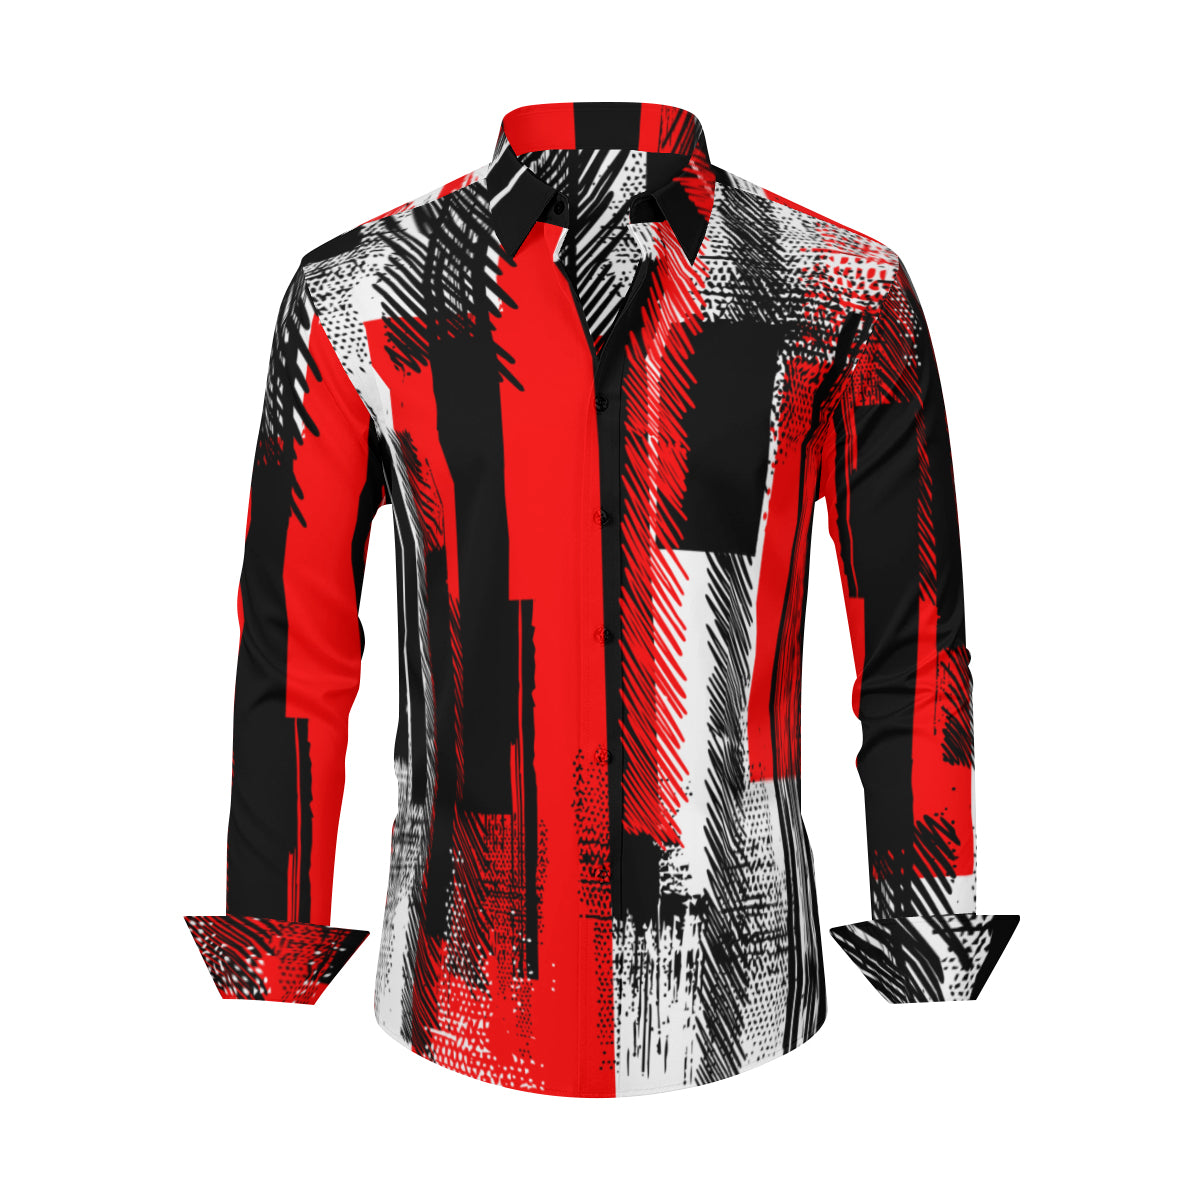 Red Black Shirt Men, Grunge Shirt, 90s shirt style, Abstract Shirt Men, Abstract black shirt, Unique Shirt Men, Rocker Shirt, Edgy shirt